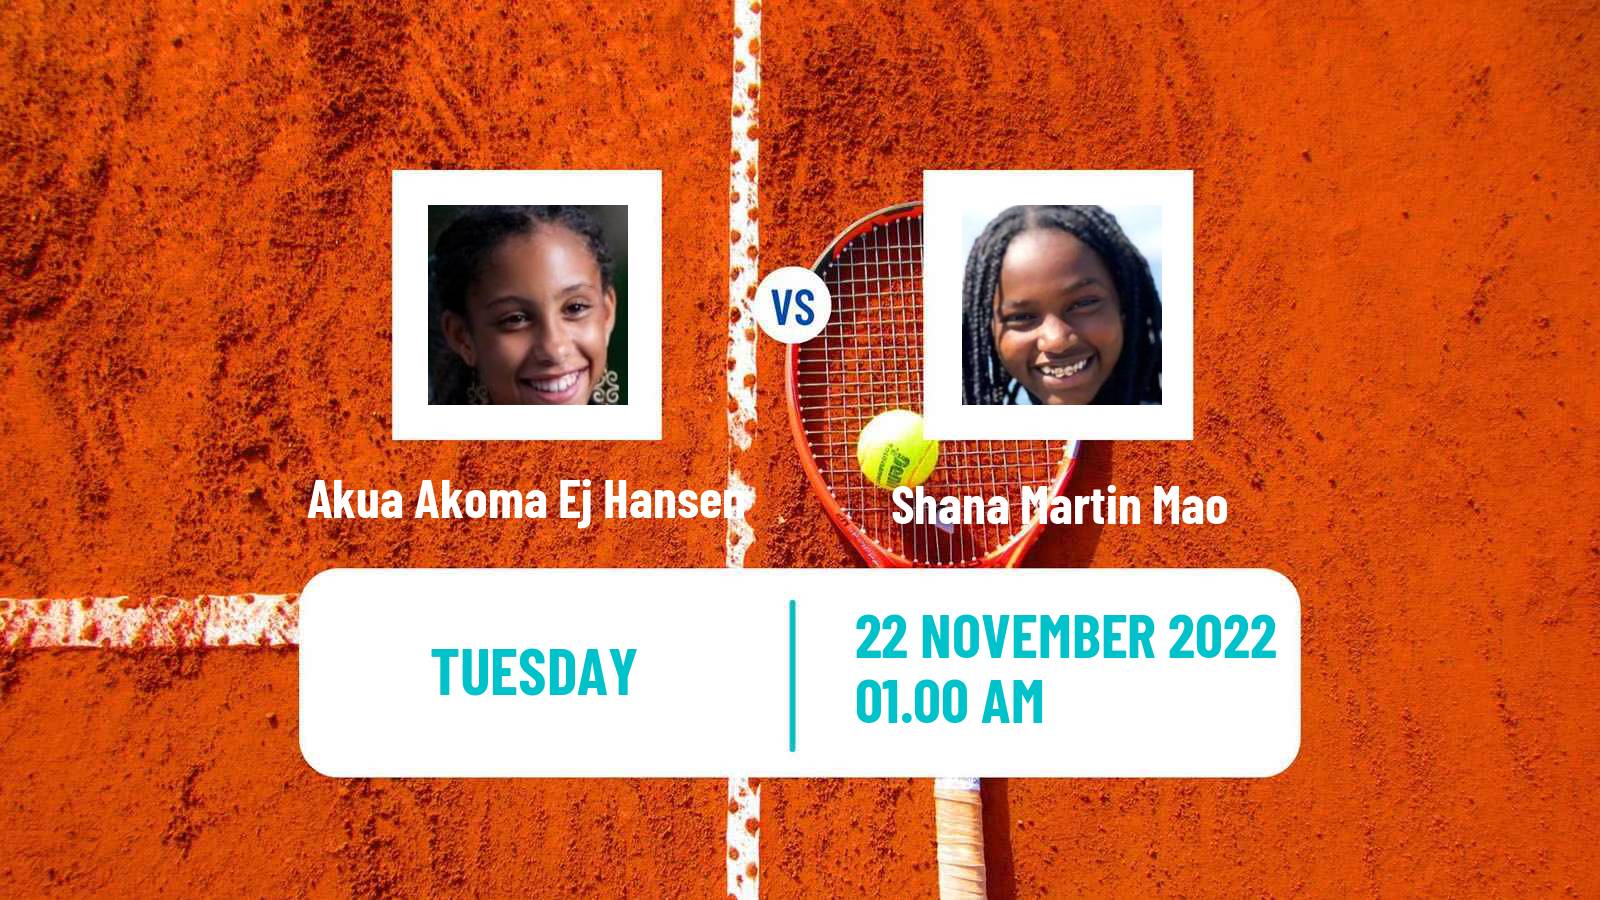 Tennis ITF Tournaments Akua Akoma Ej Hansen - Shana Martin Mao